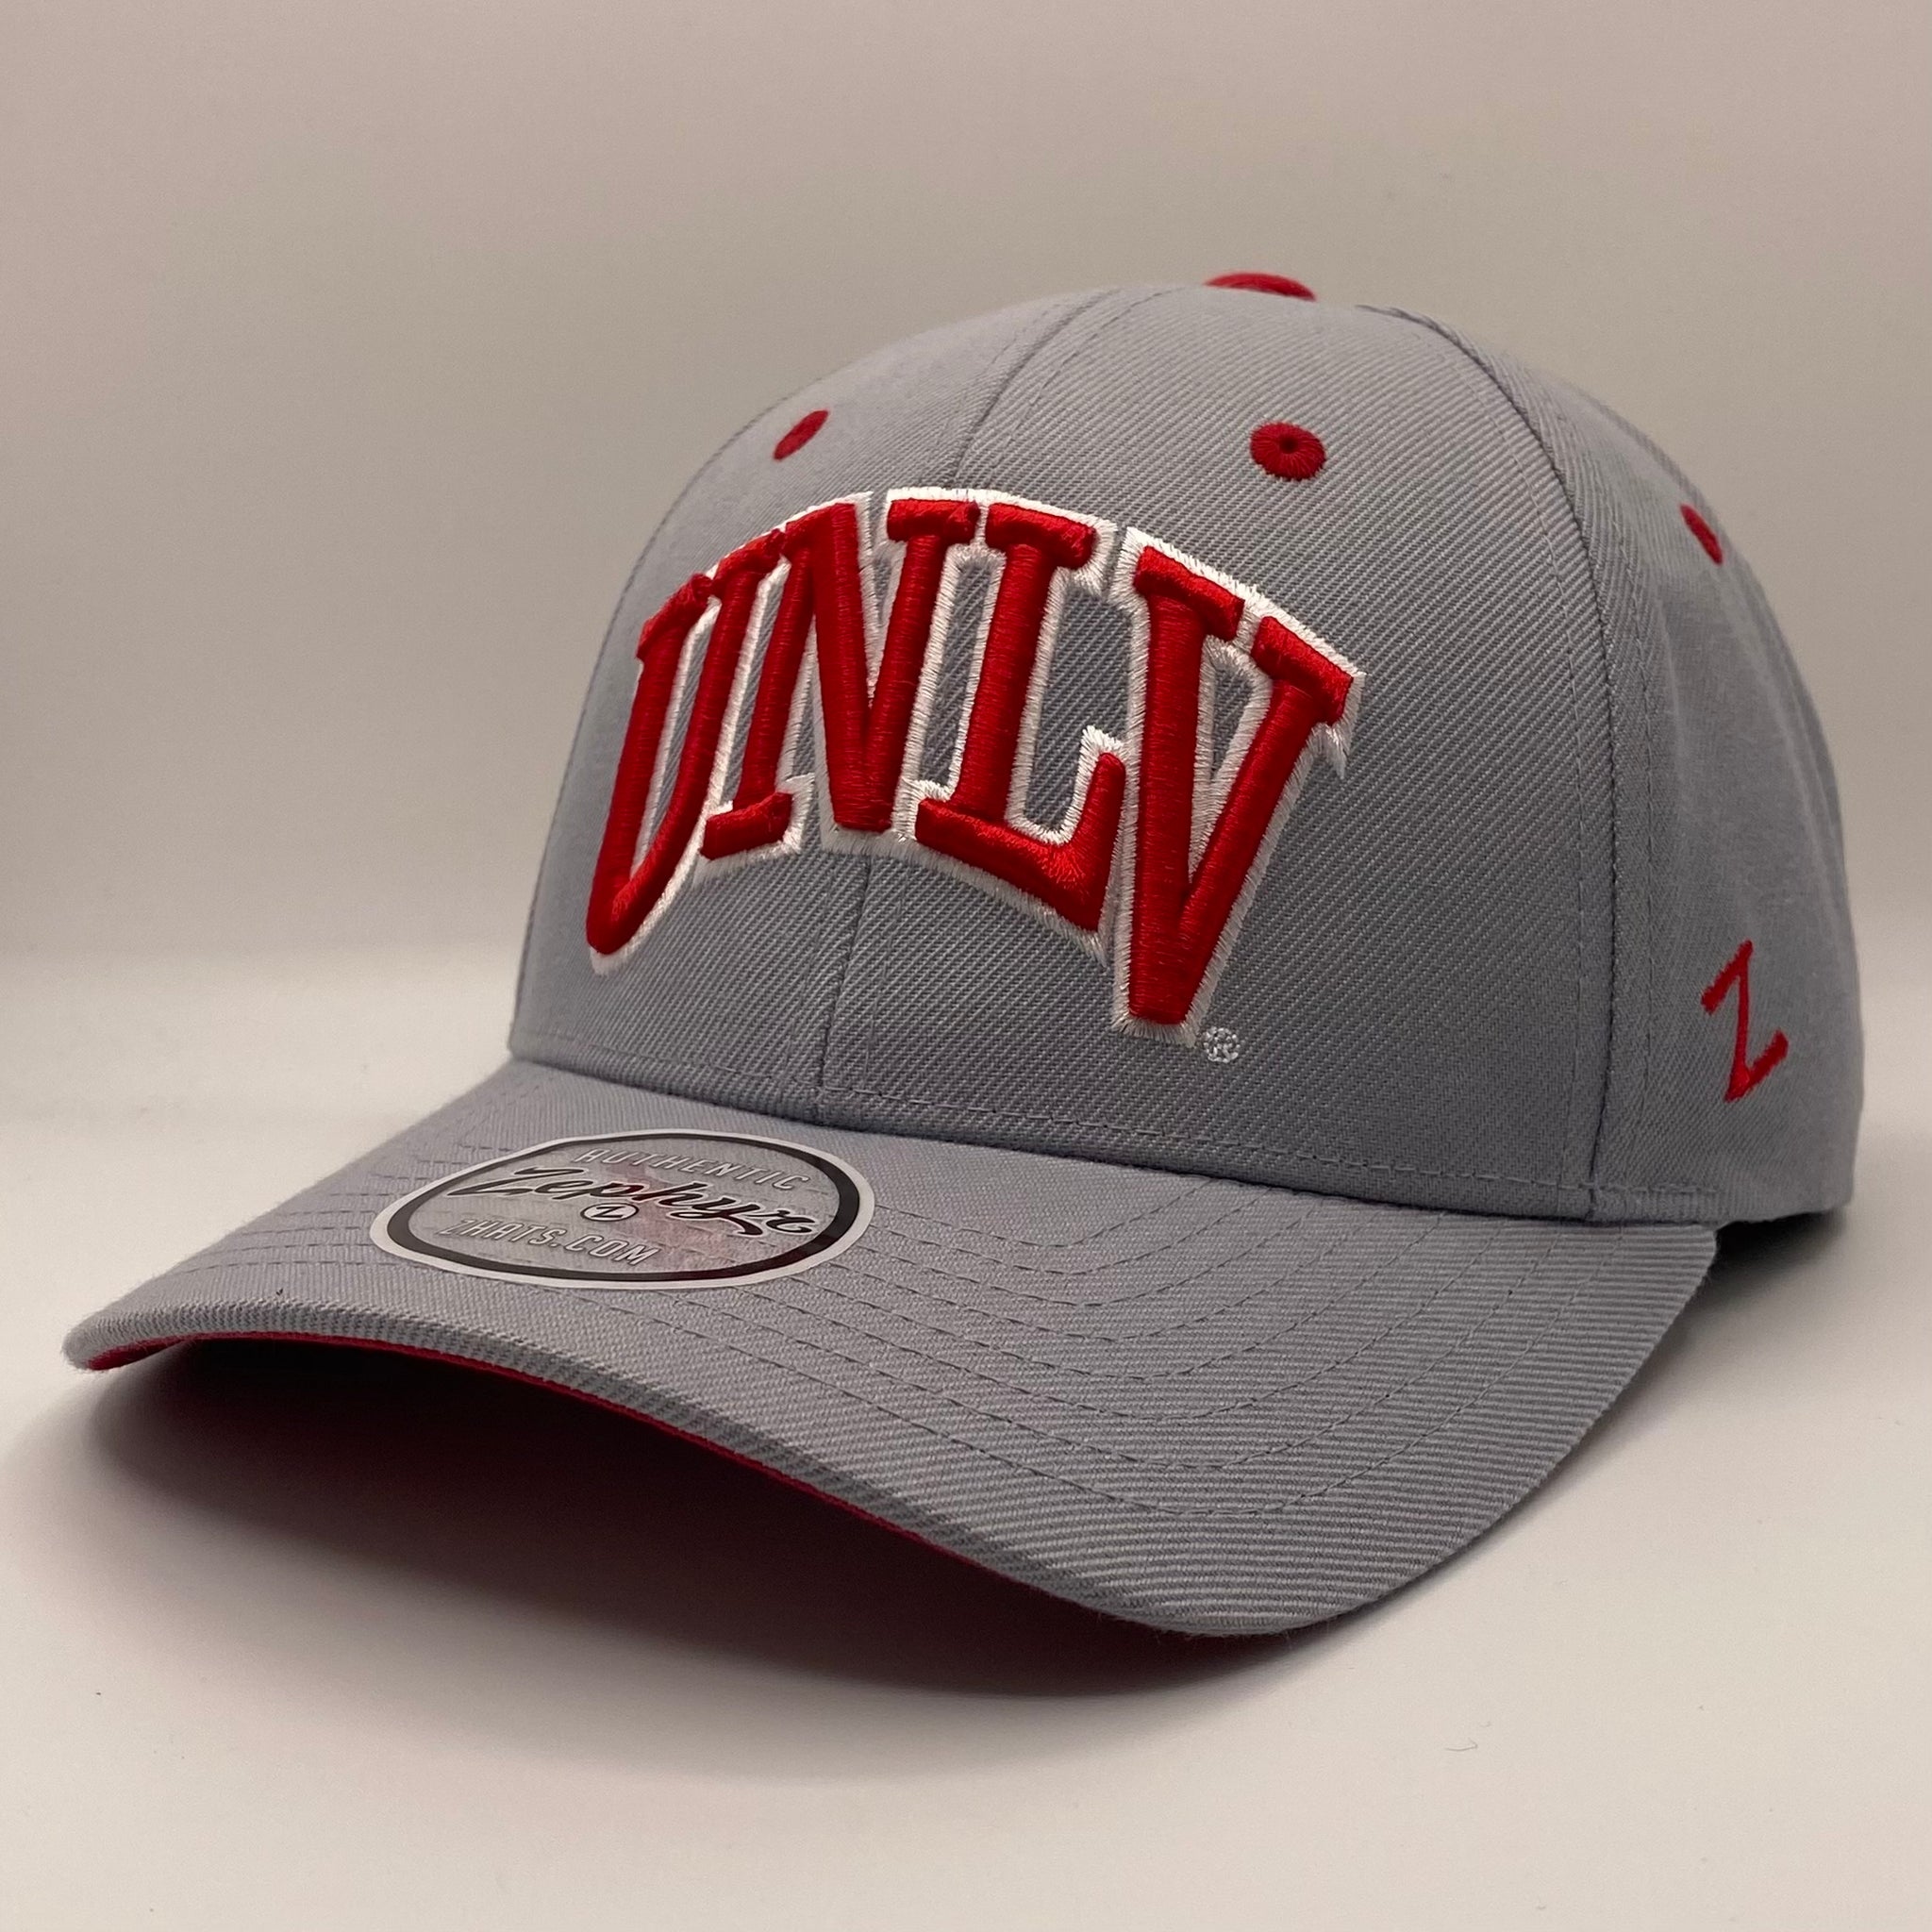 University of Nevada Las Vegas UNLV Rebels Competitor Snapback - Gray